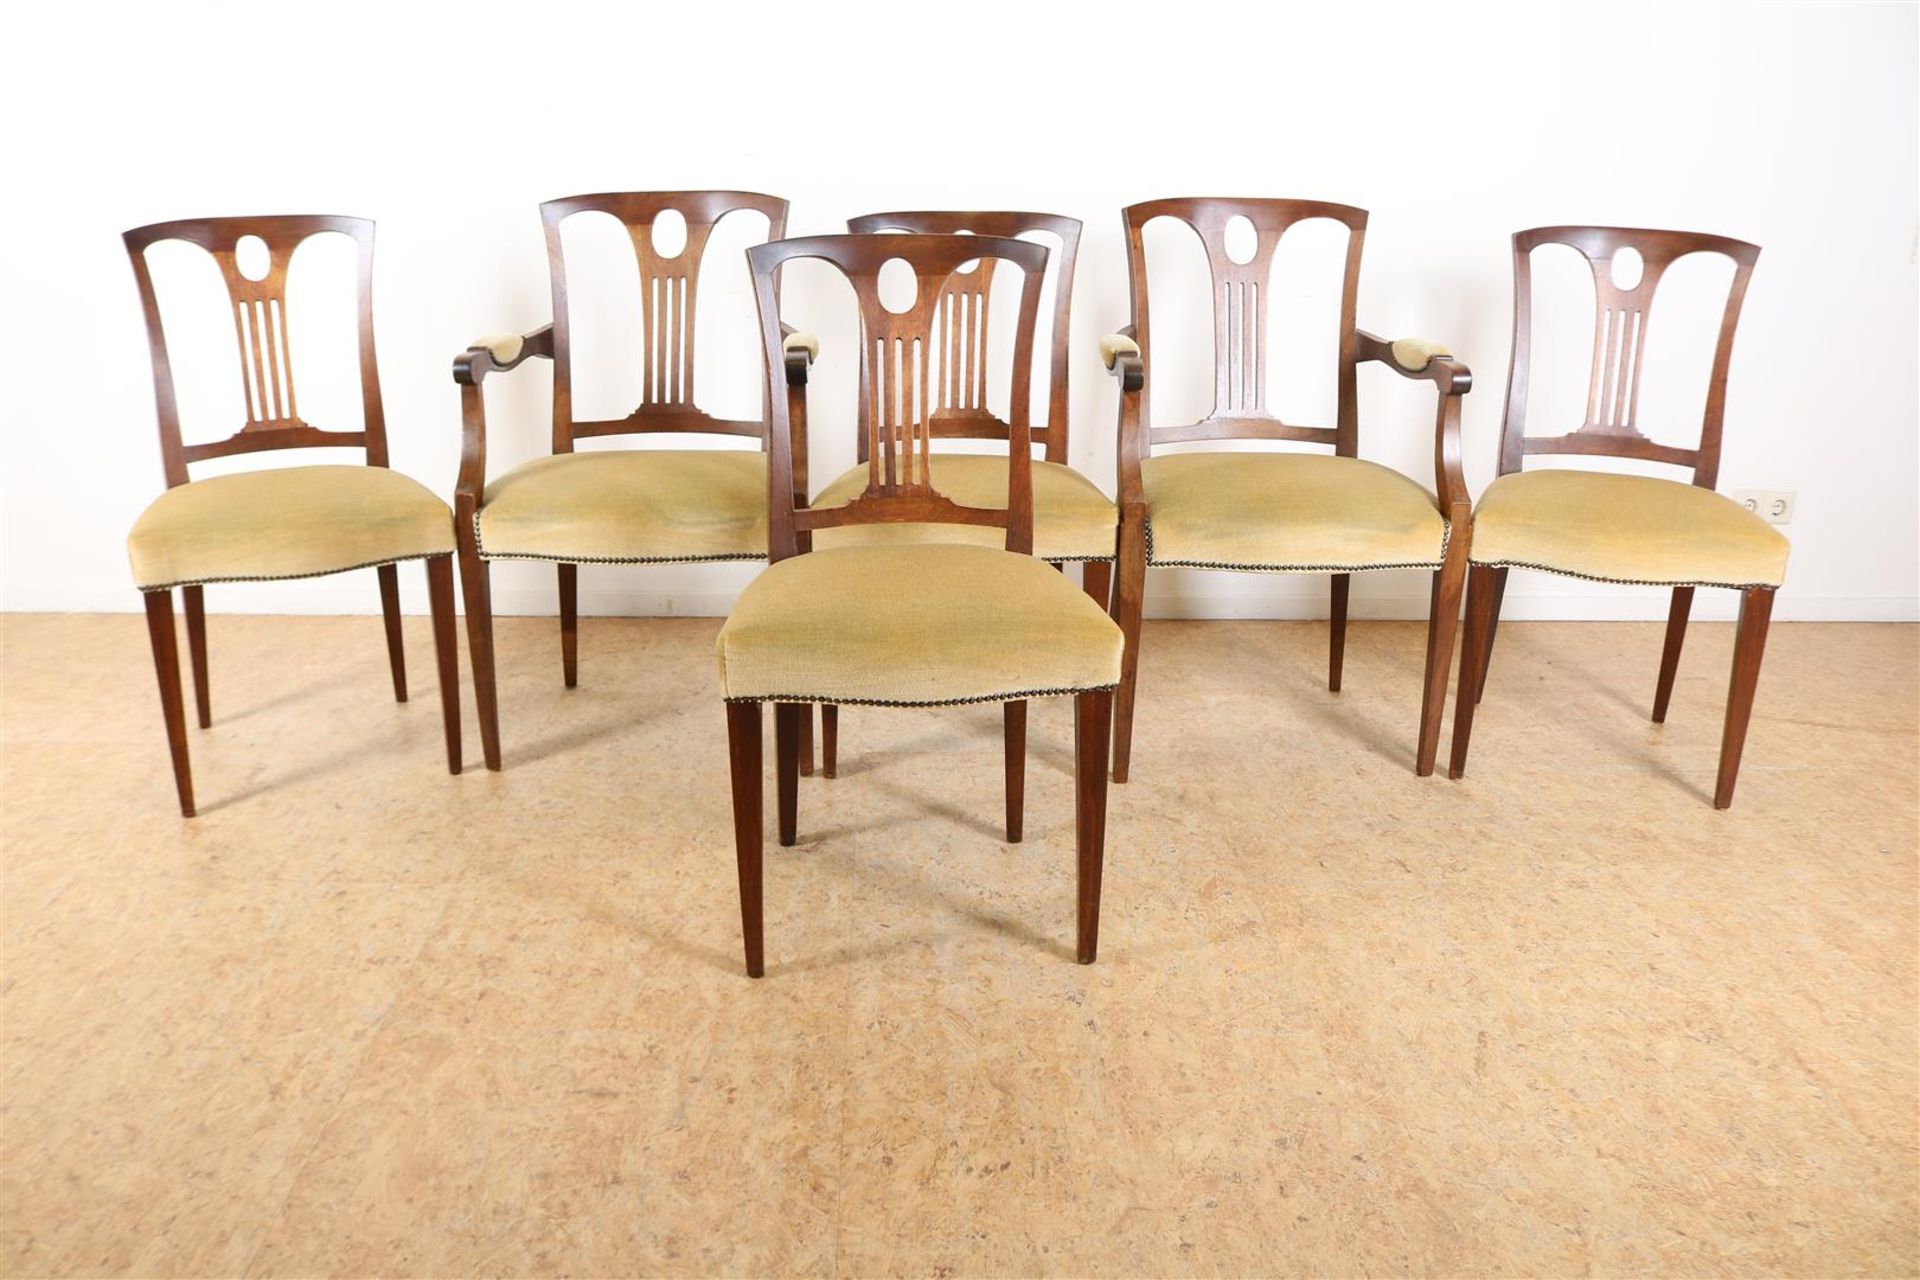 6 openwork wooden chairs